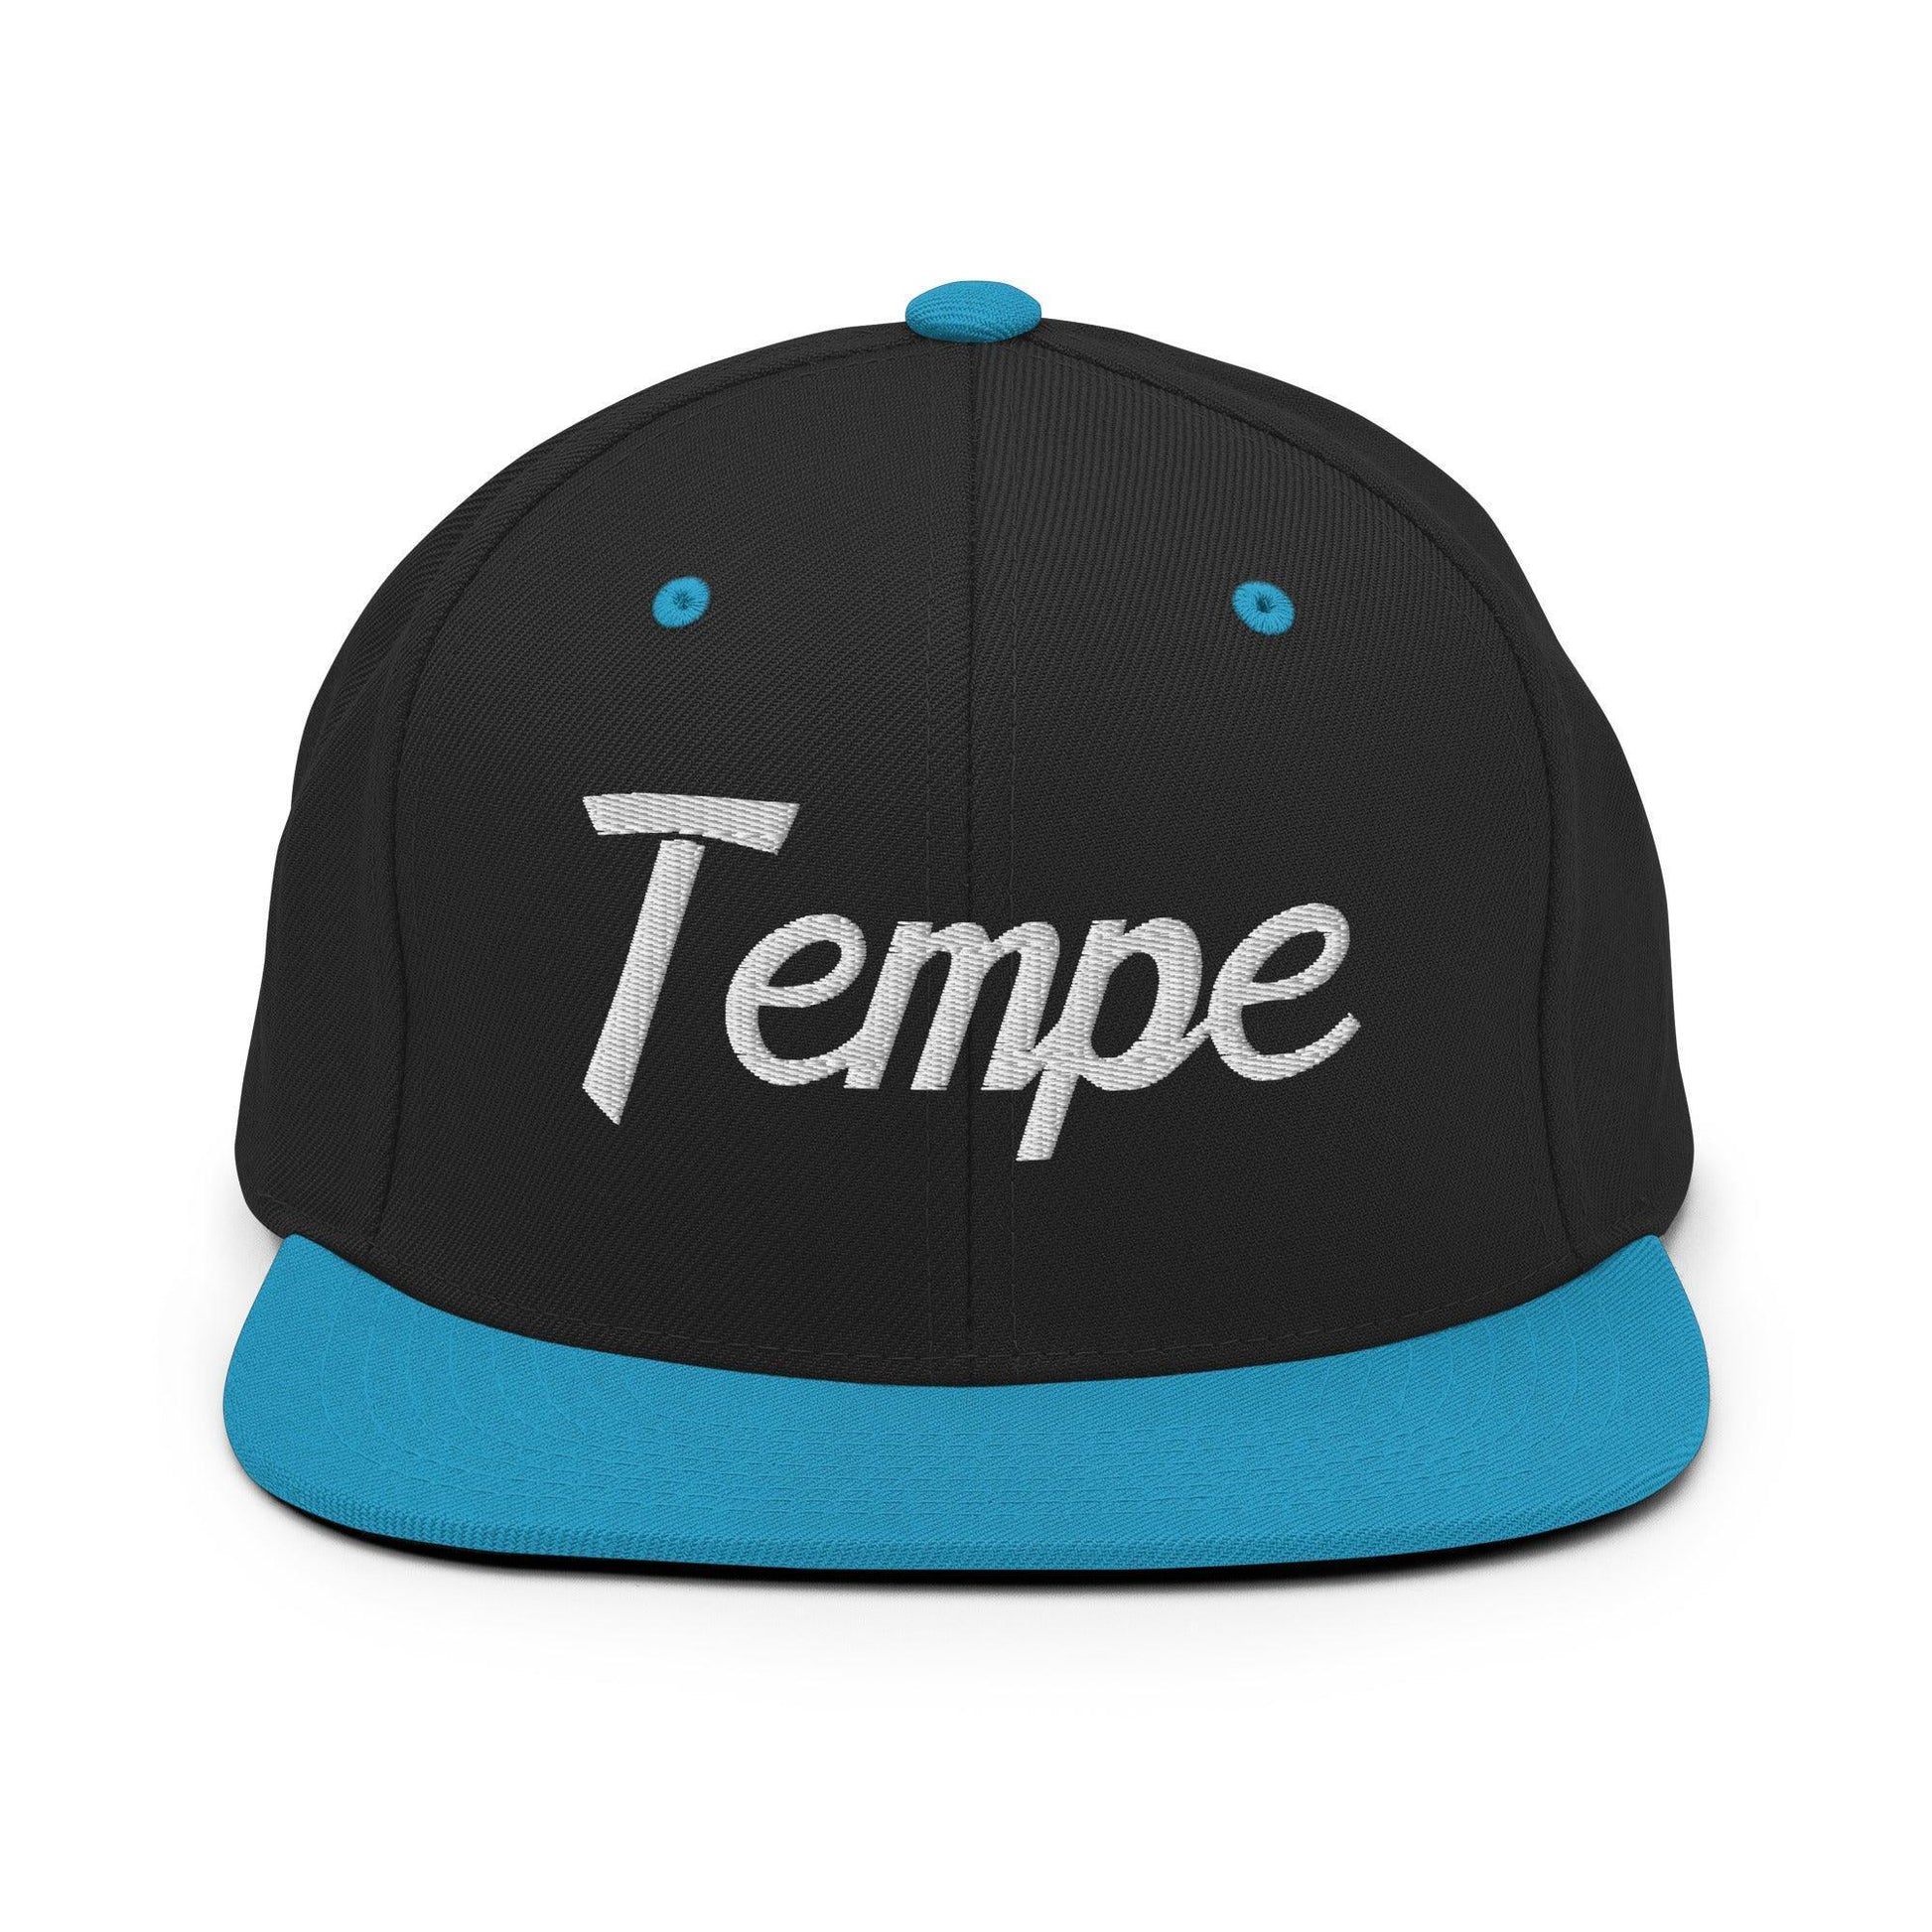 Tempe Script Snapback Hat Black Teal